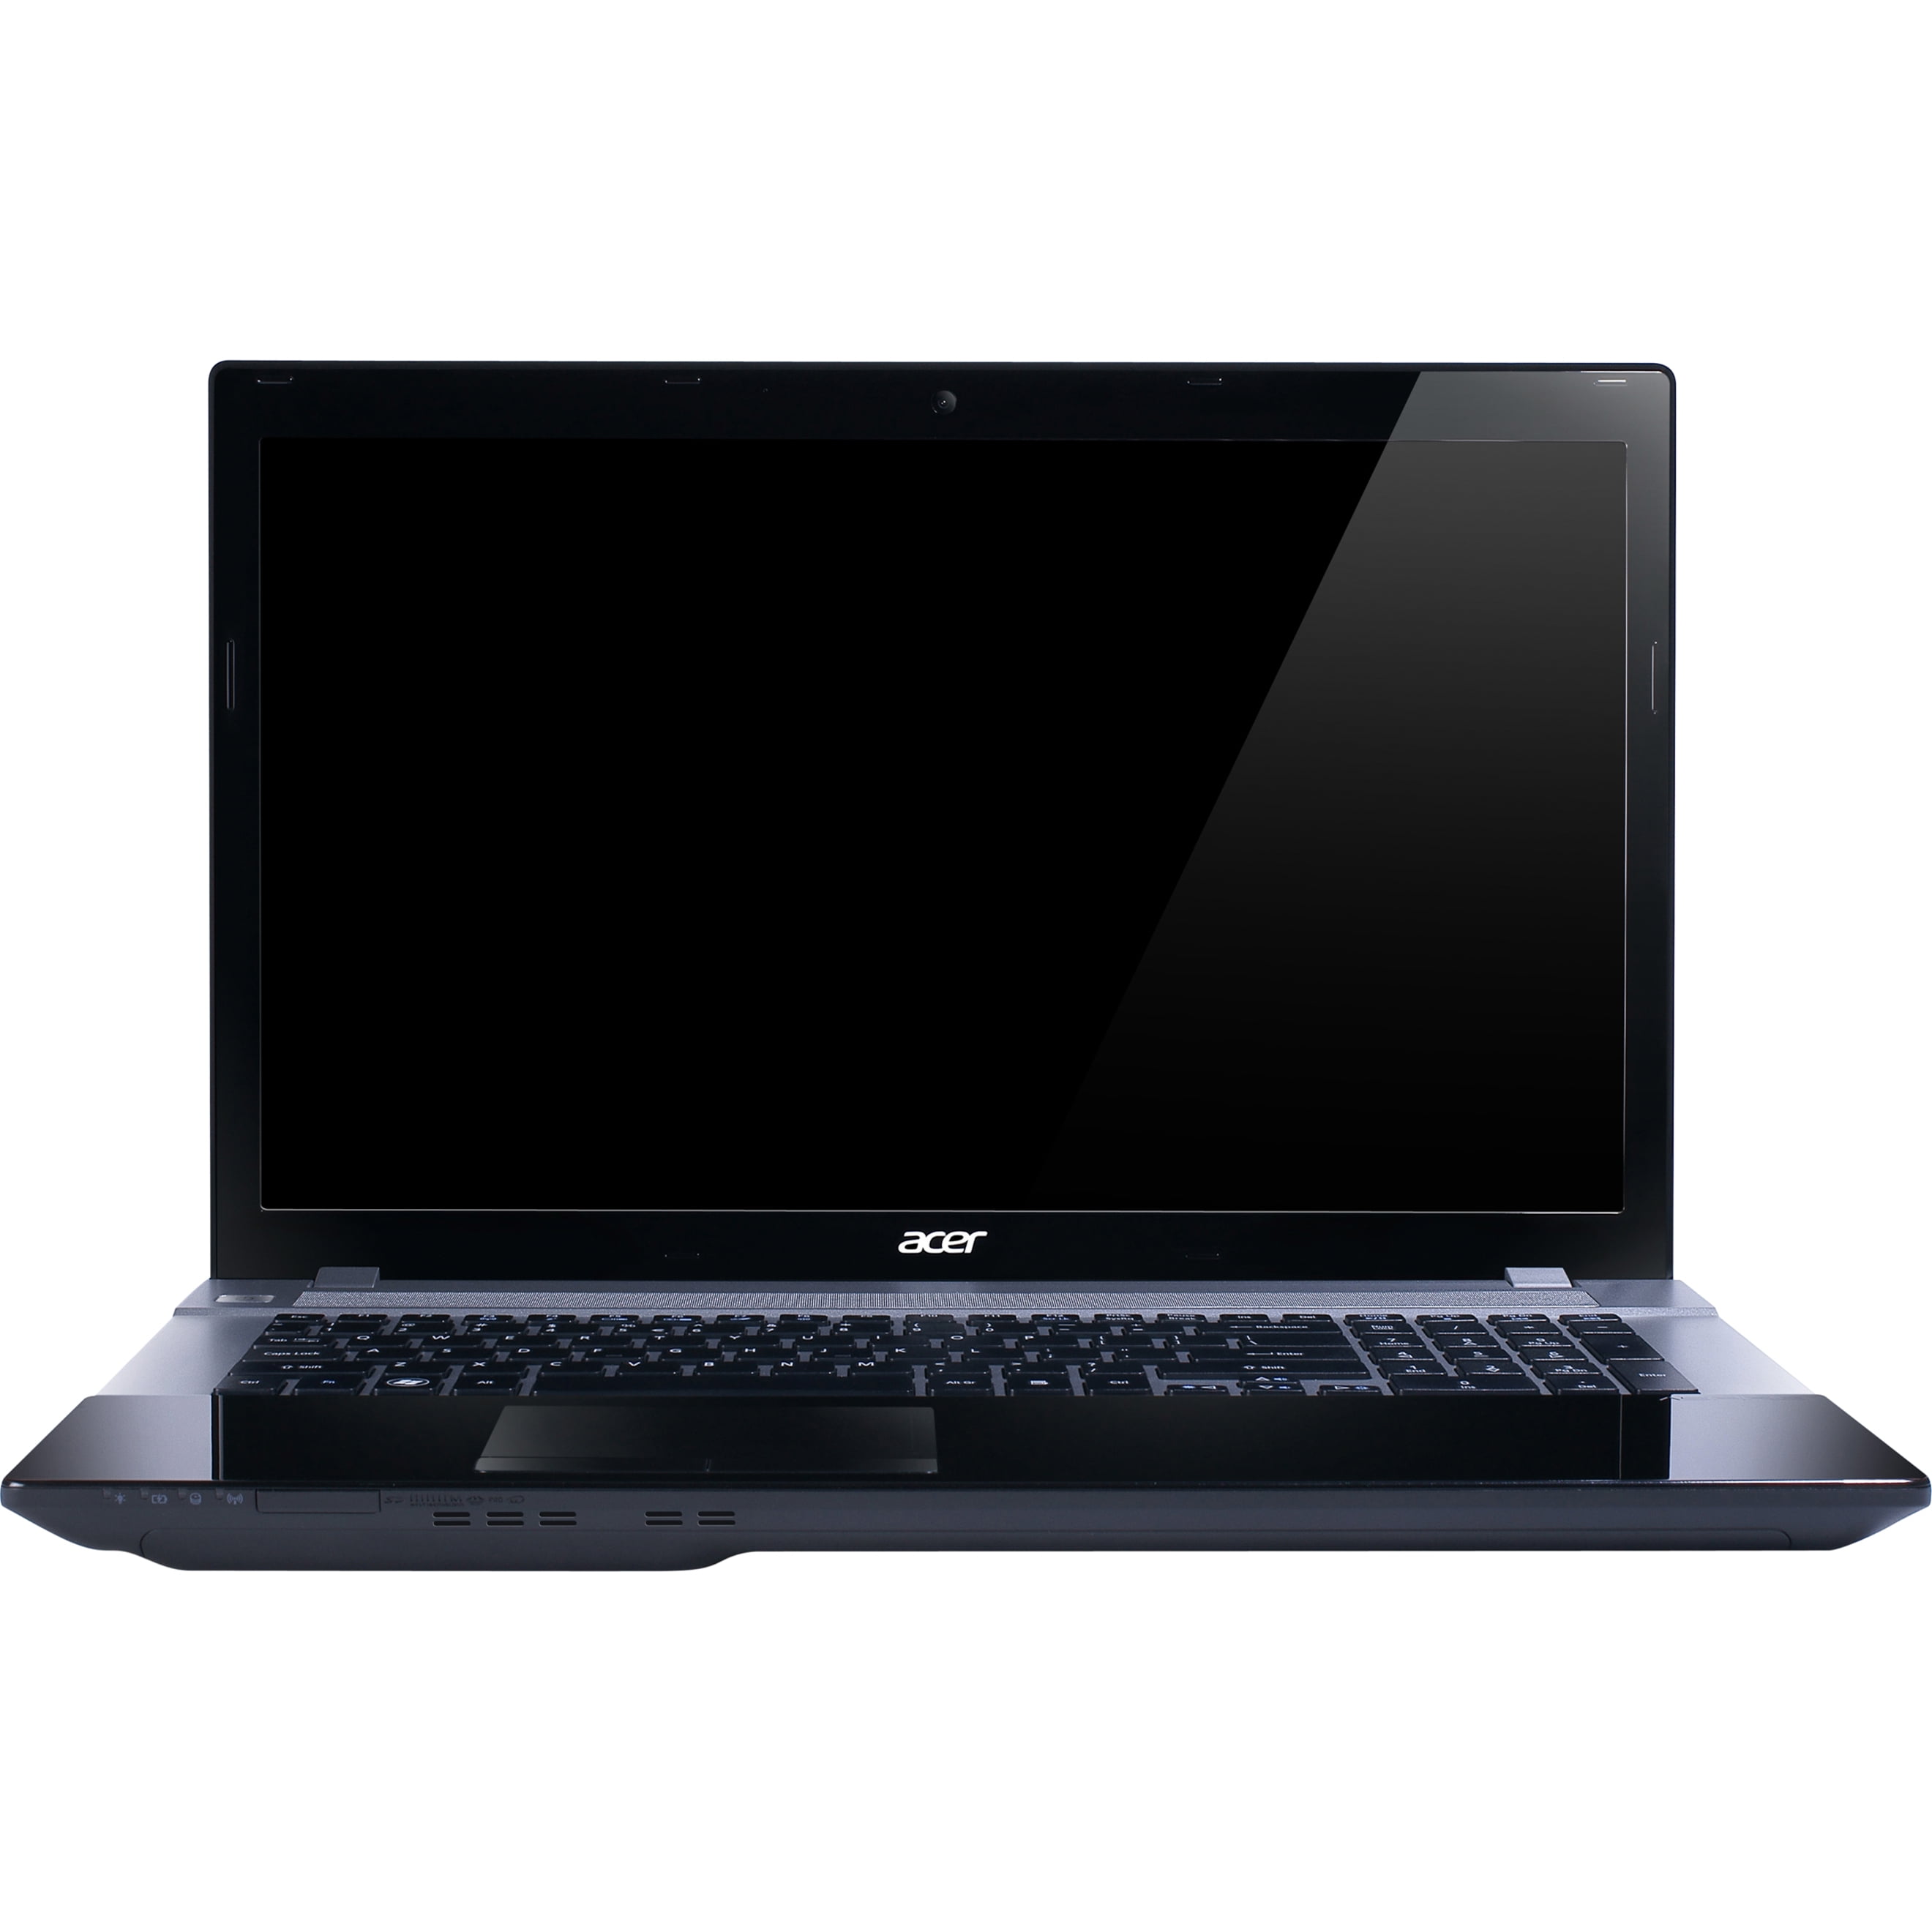 Acer Aspire 17.3" Intel i7 i7-3632QM, 8GB 750GB 120GB SSD, DVD Writer, Windows 8, V3-771G-73638G87Maii - Walmart.com